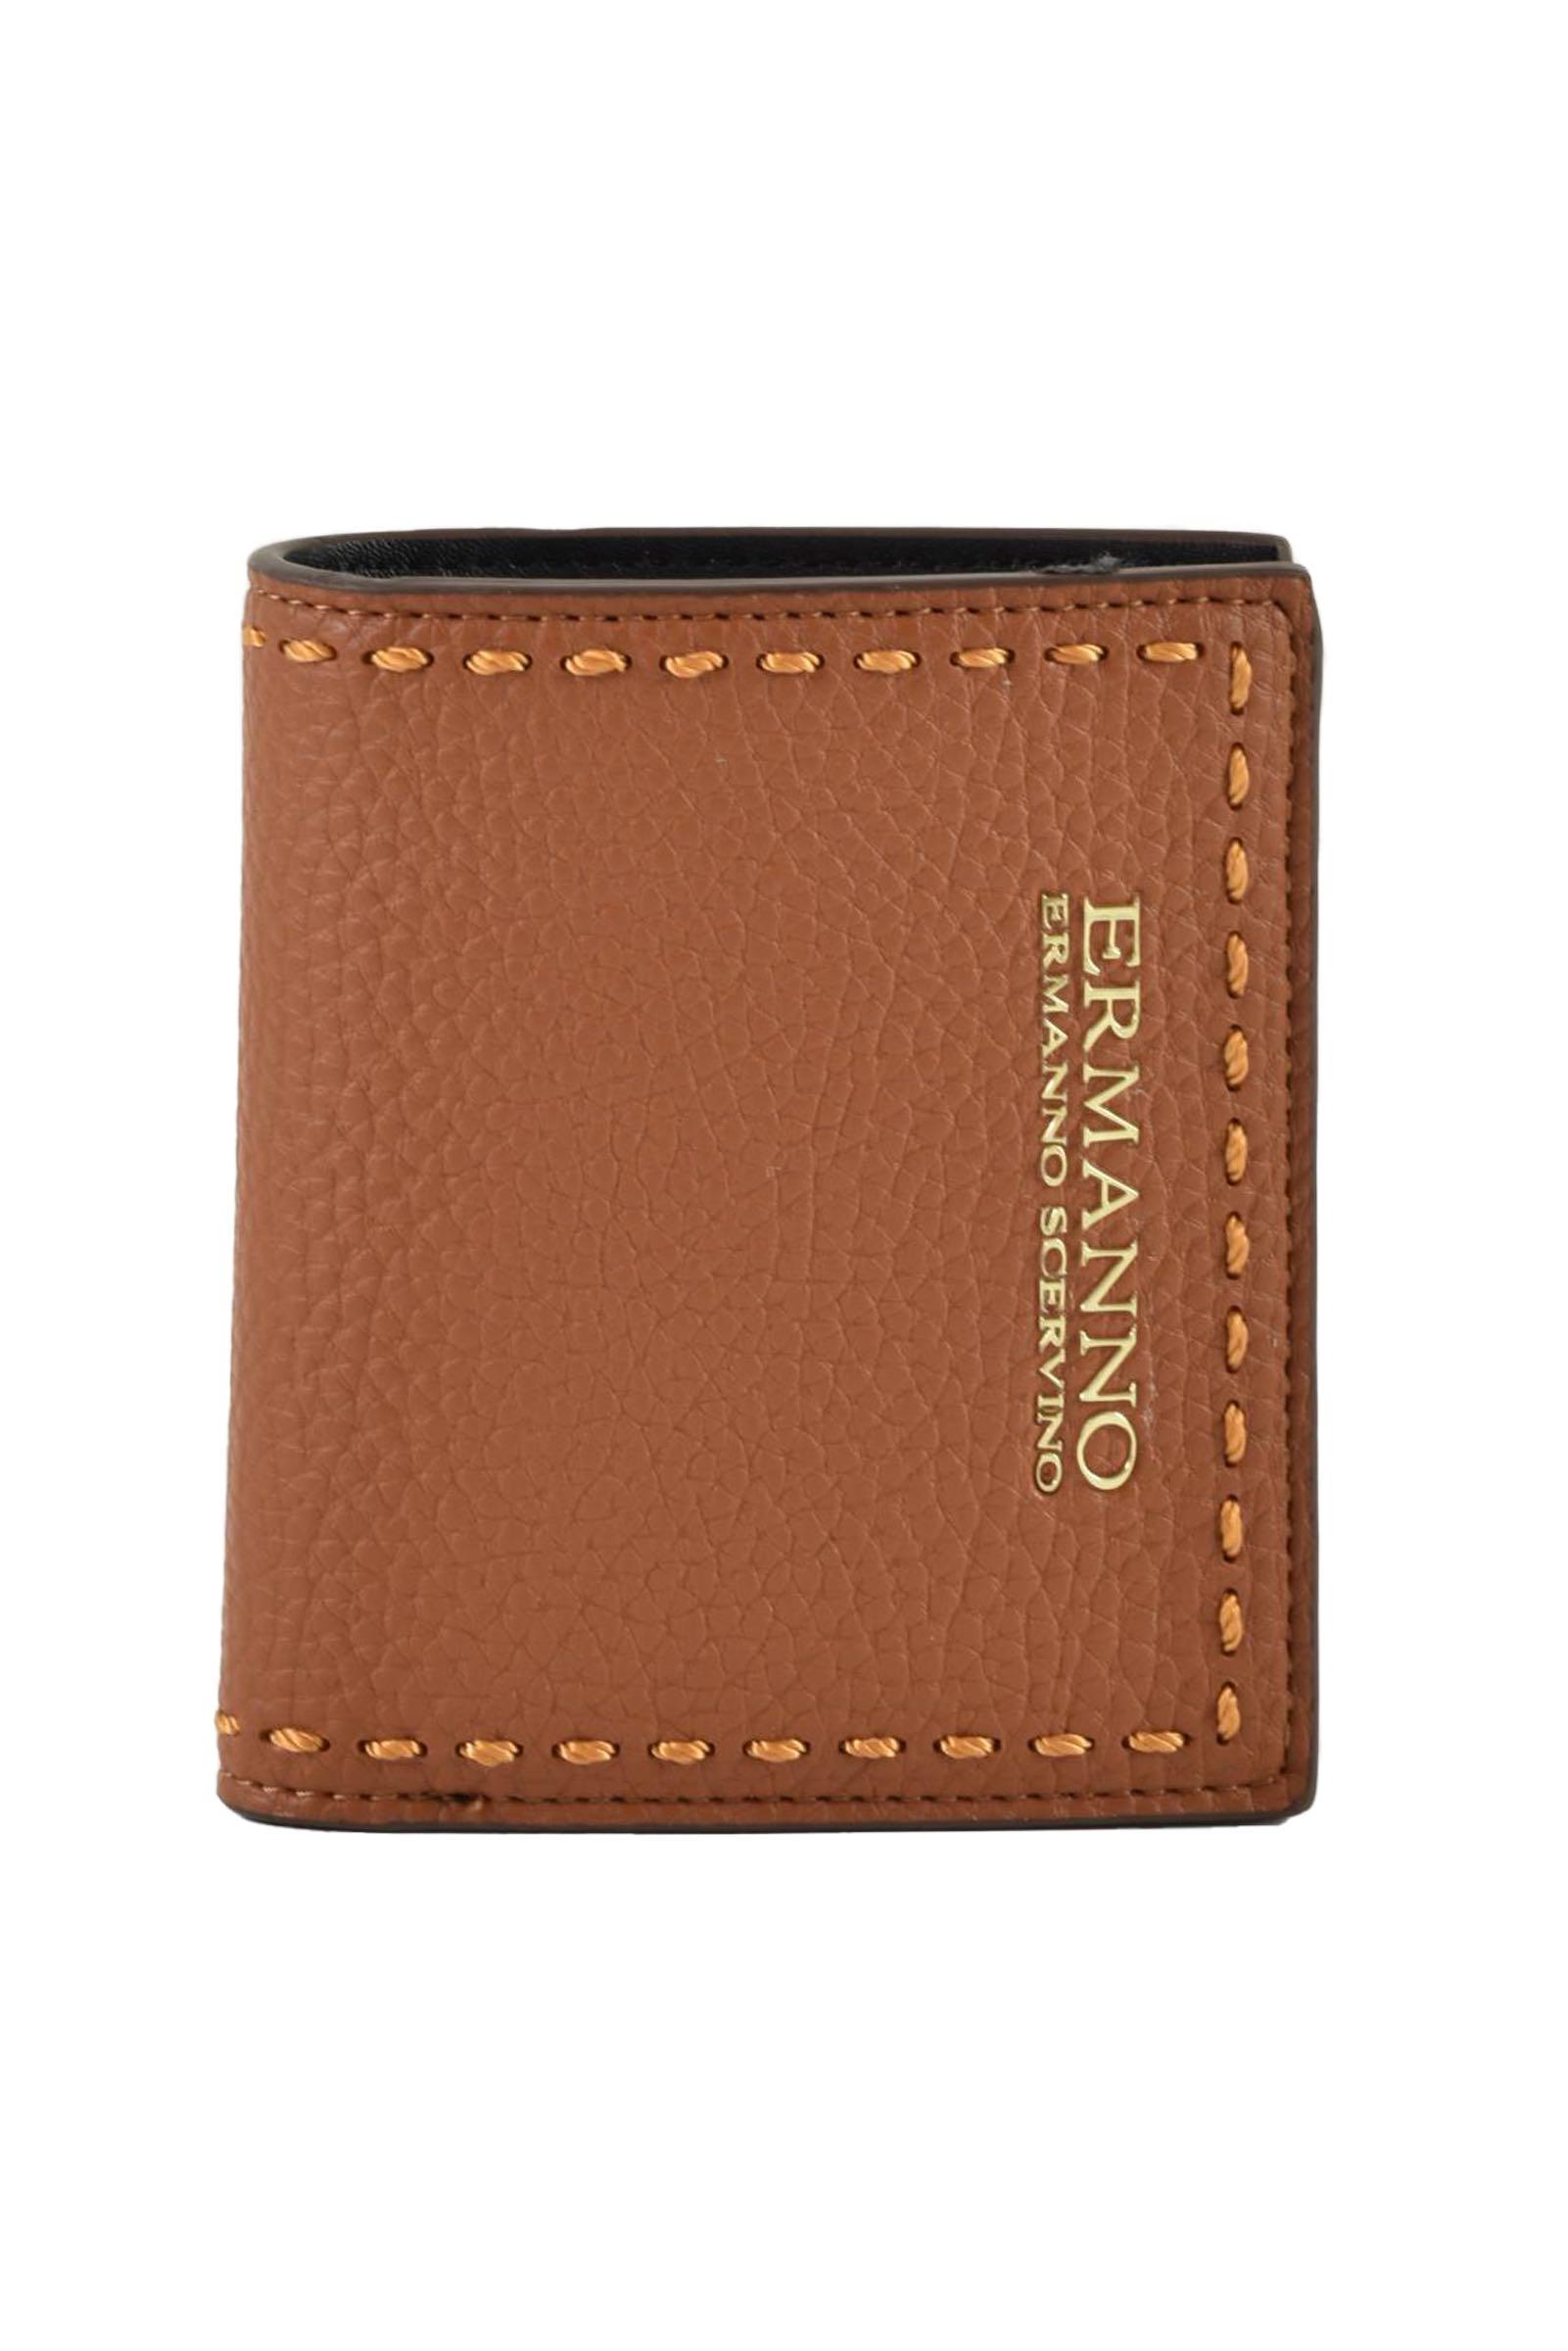 Ermanno Scervino Women's Leather Wallet